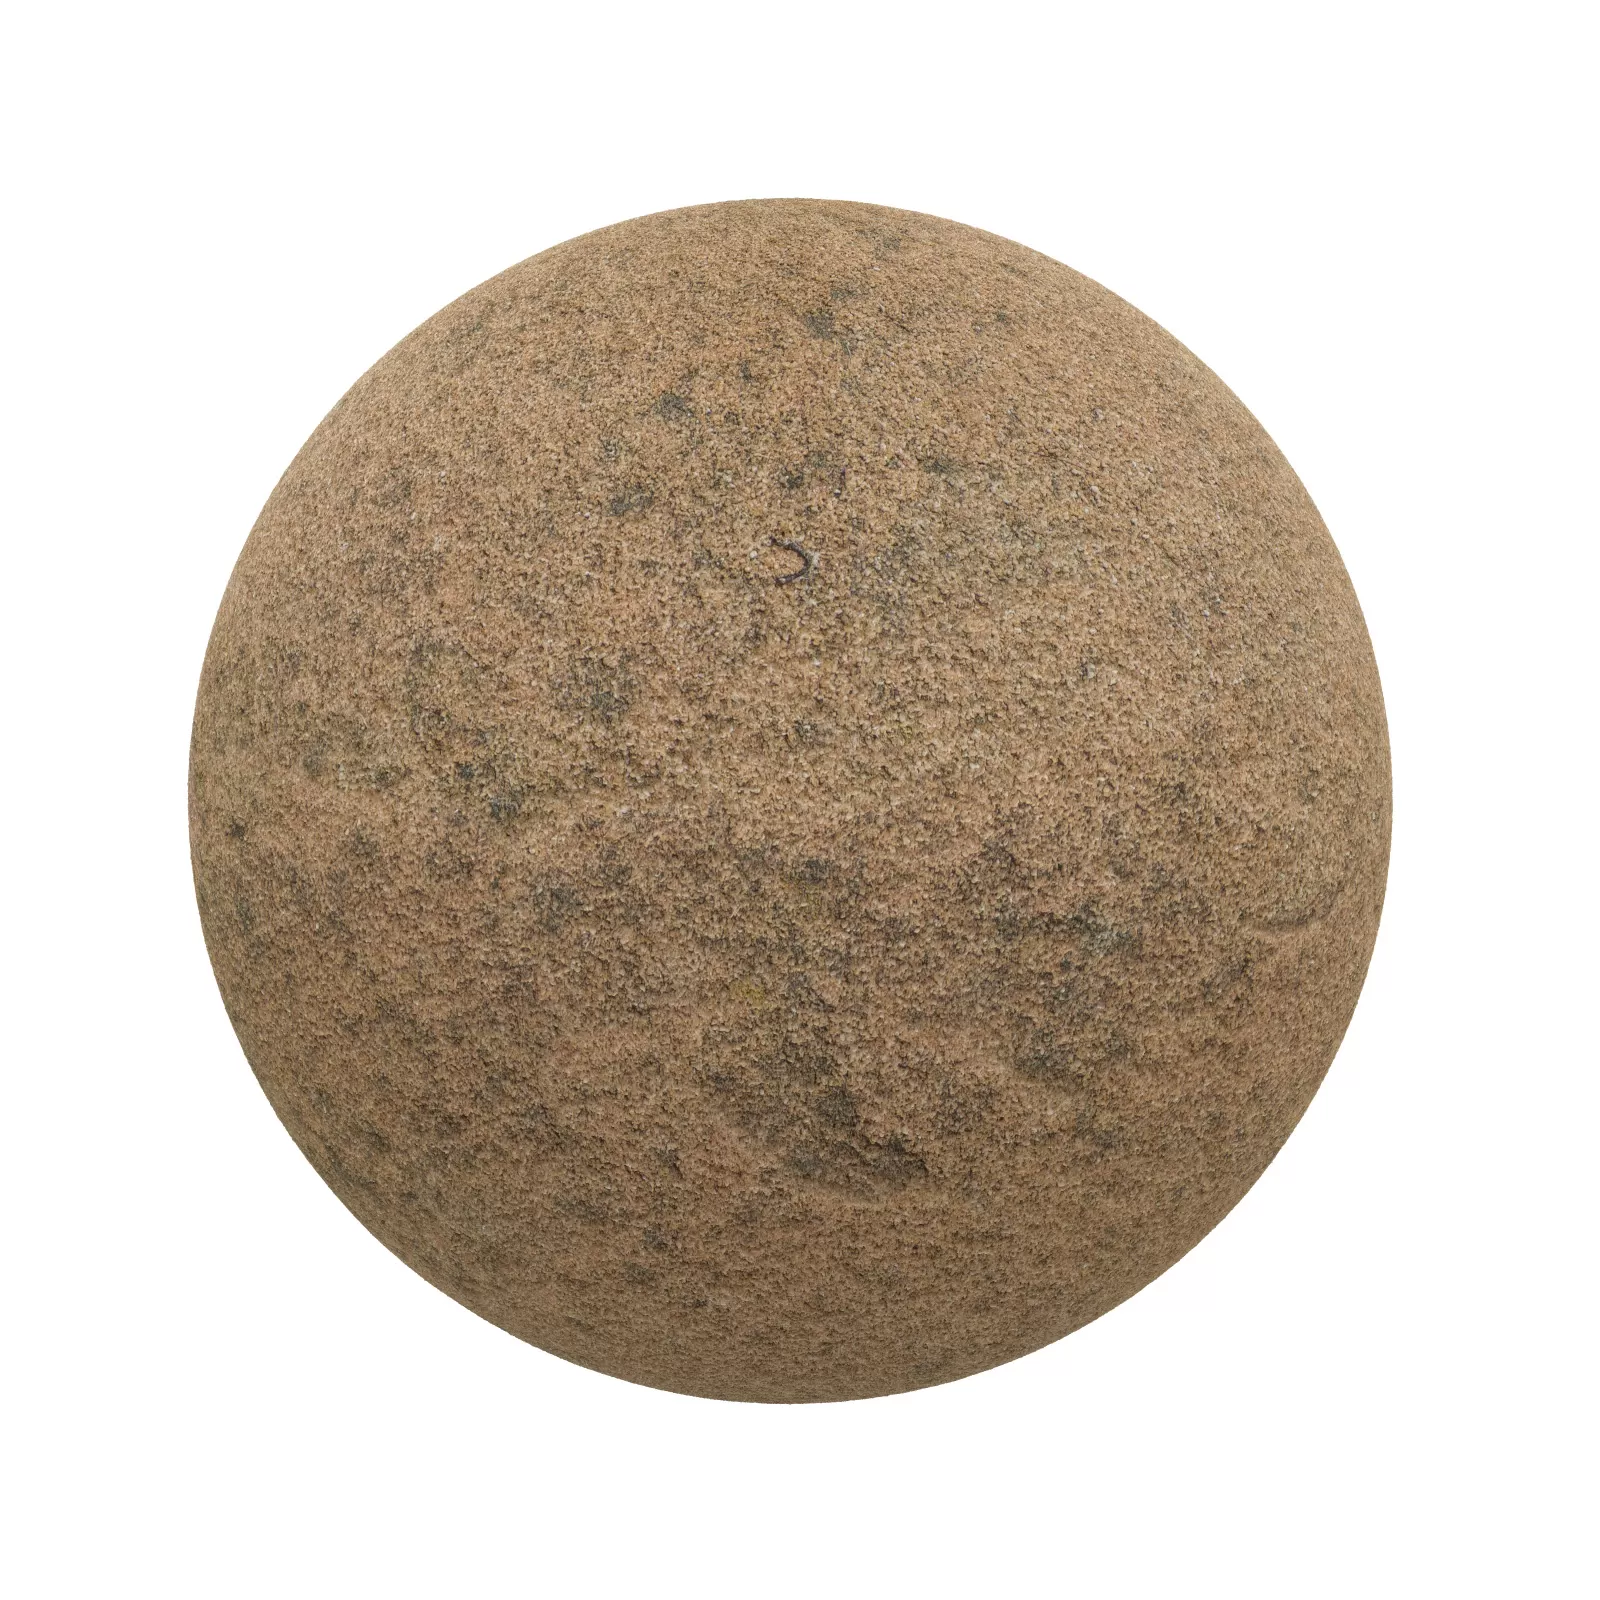 TEXTURES – STONES – CGAxis PBR Colection Vol 1 Stones – rough orange sandstone